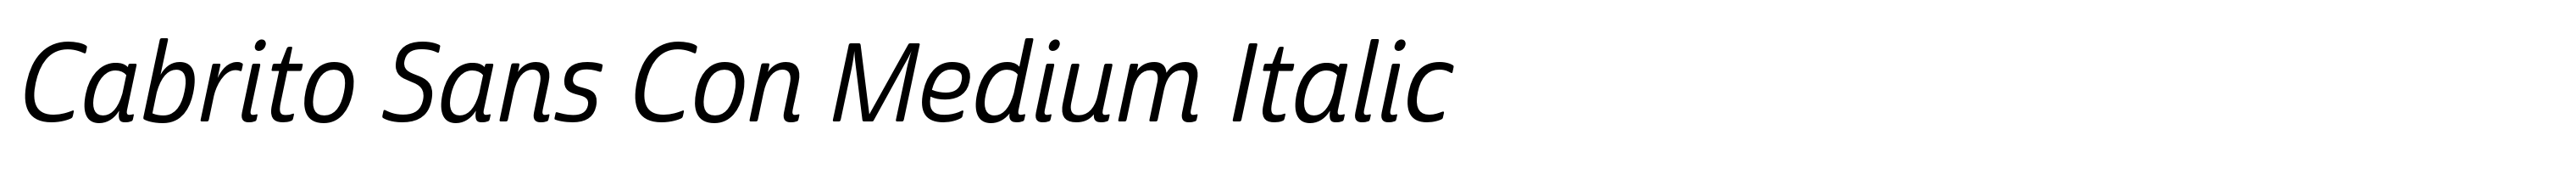 Cabrito Sans Con Medium Italic